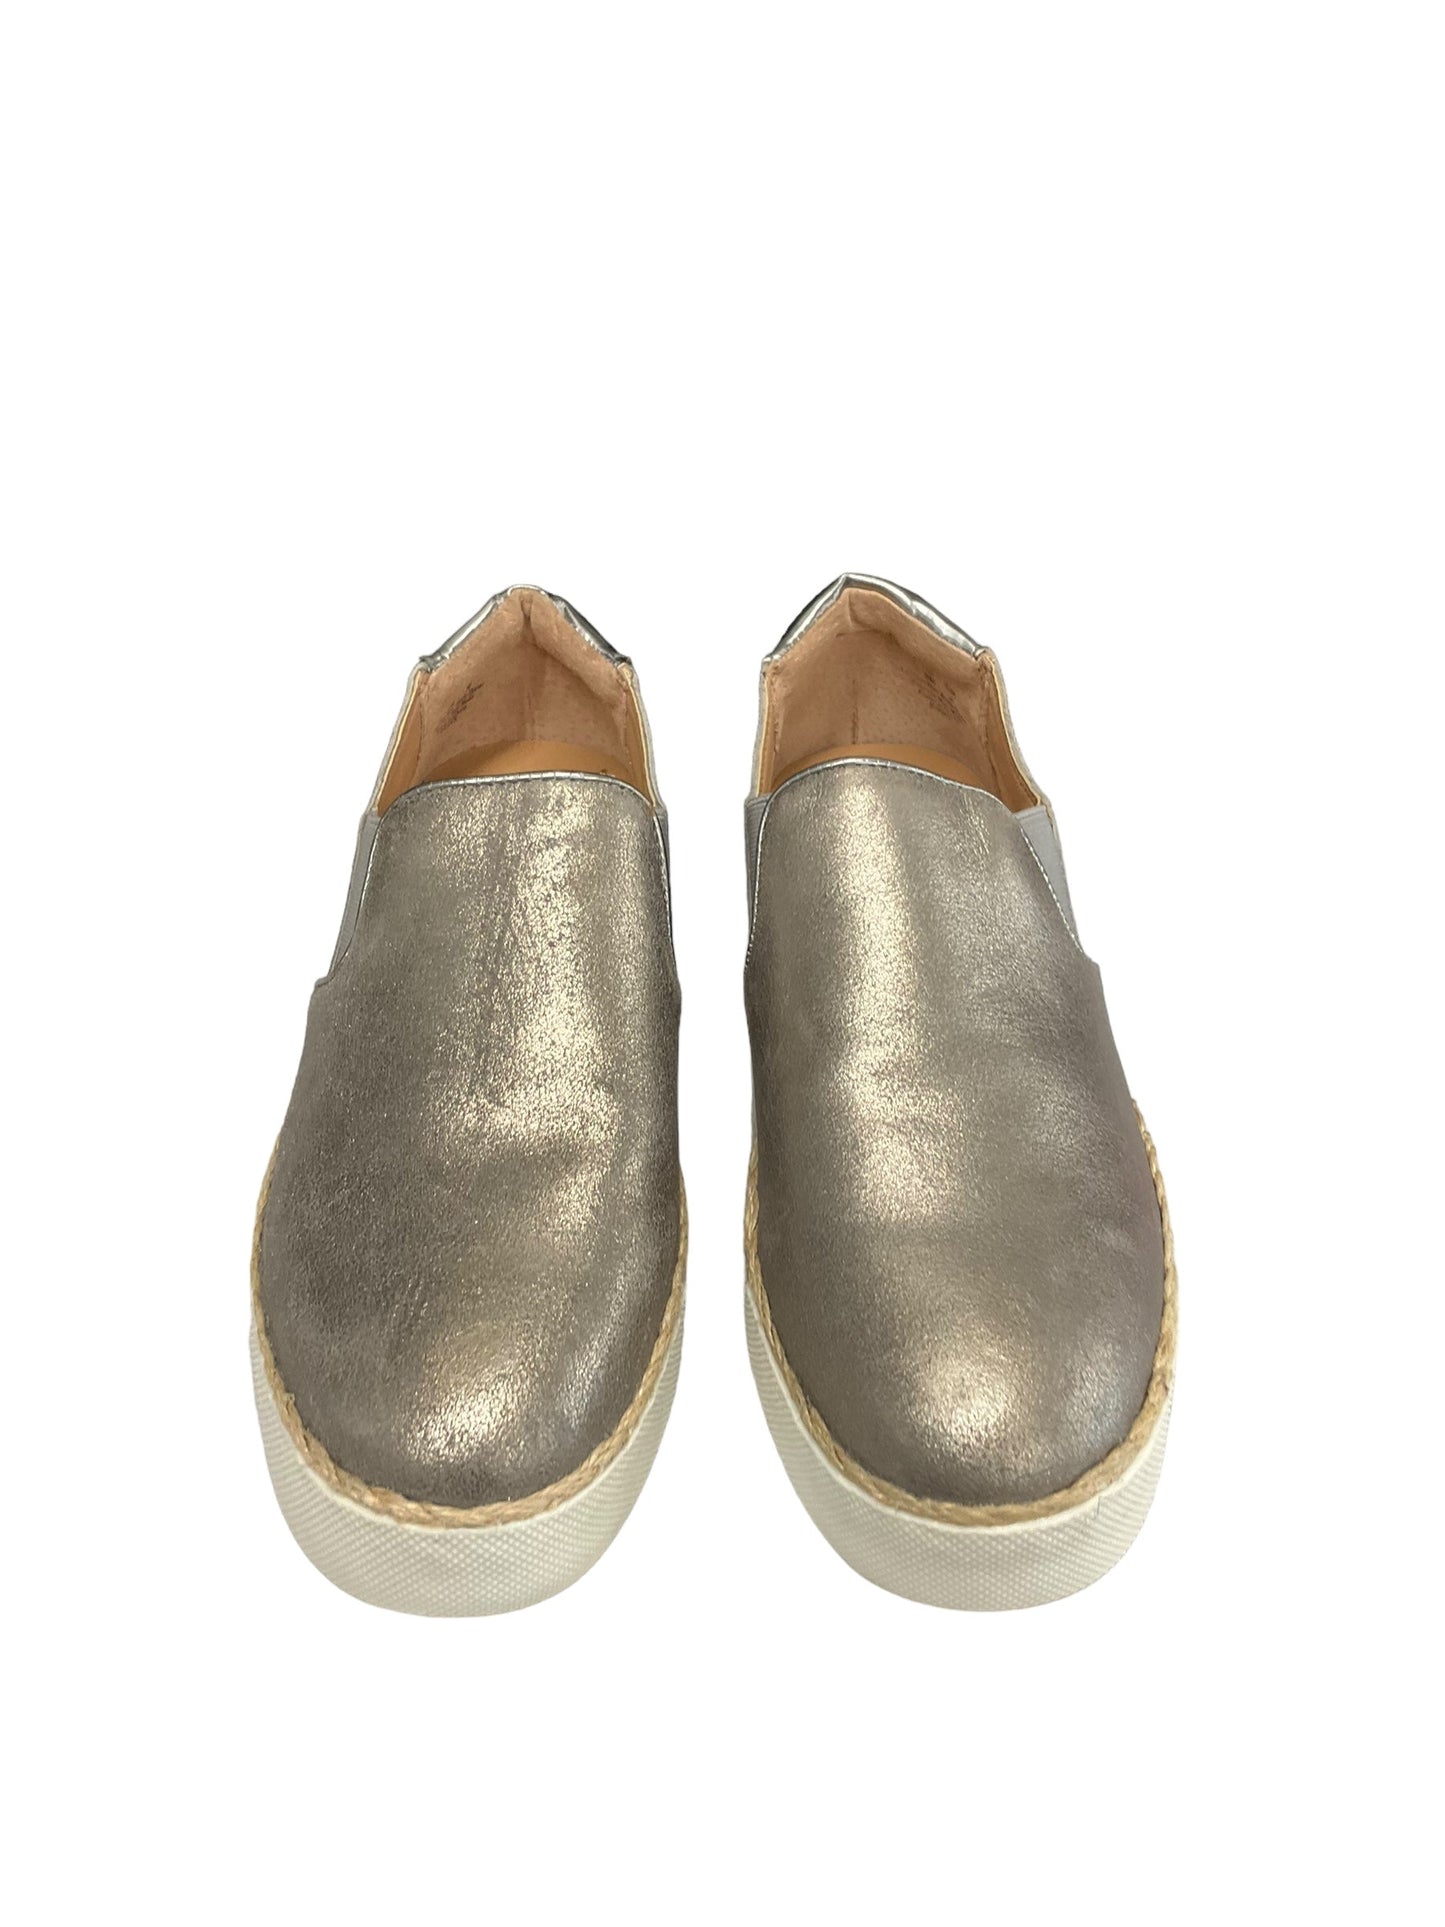 Silver Shoes Flats Sam Edelman, Size 10